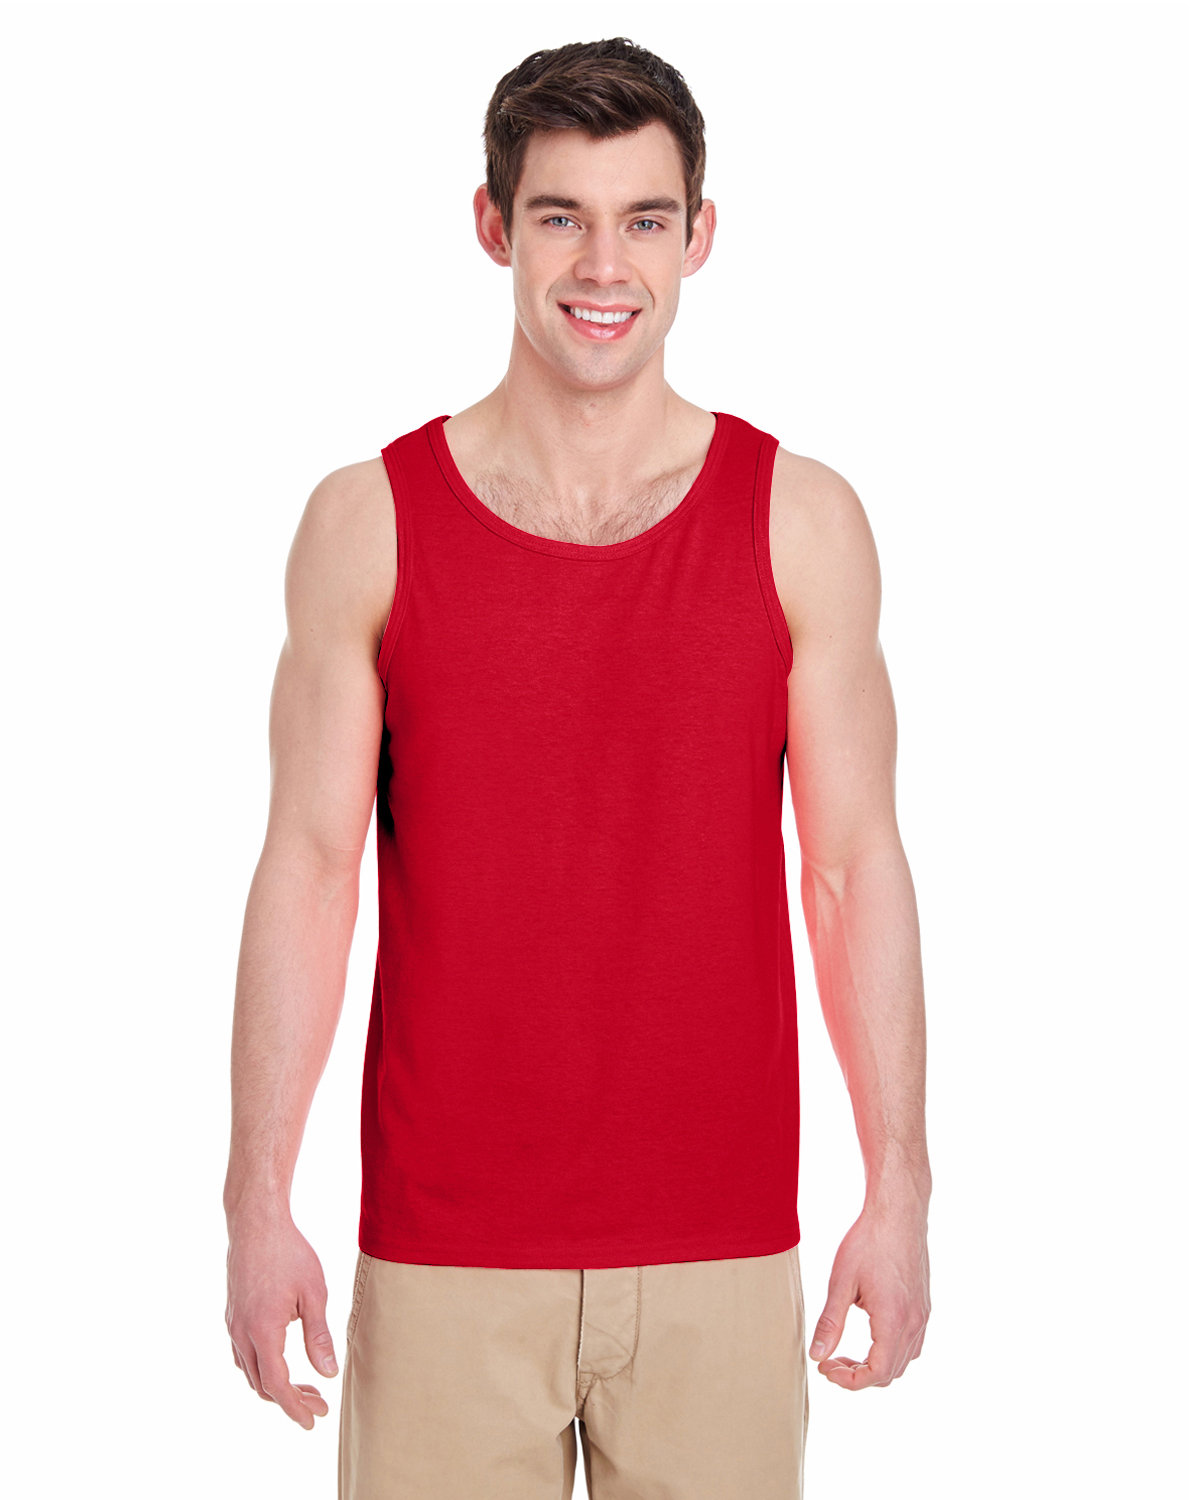 https://images.shirtspace.com/fullsize/8UDClCNZ4Xg8NSutHMAjGQ%3D%3D/333945/4978-gildan-g520-heavy-cotton-tank-top-front-red.jpg